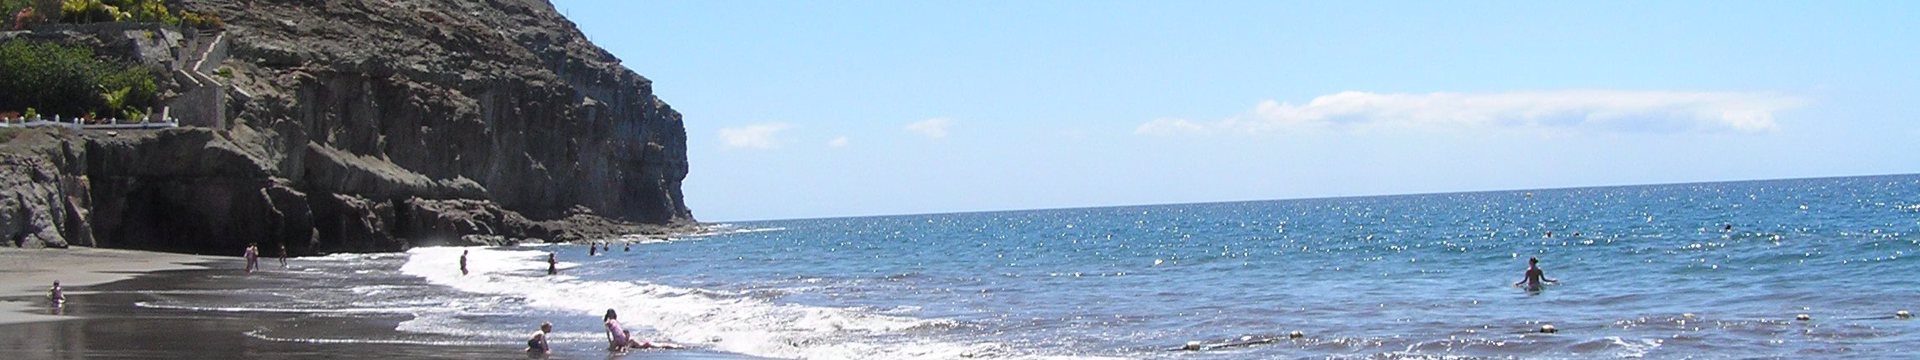 Playa Taurito